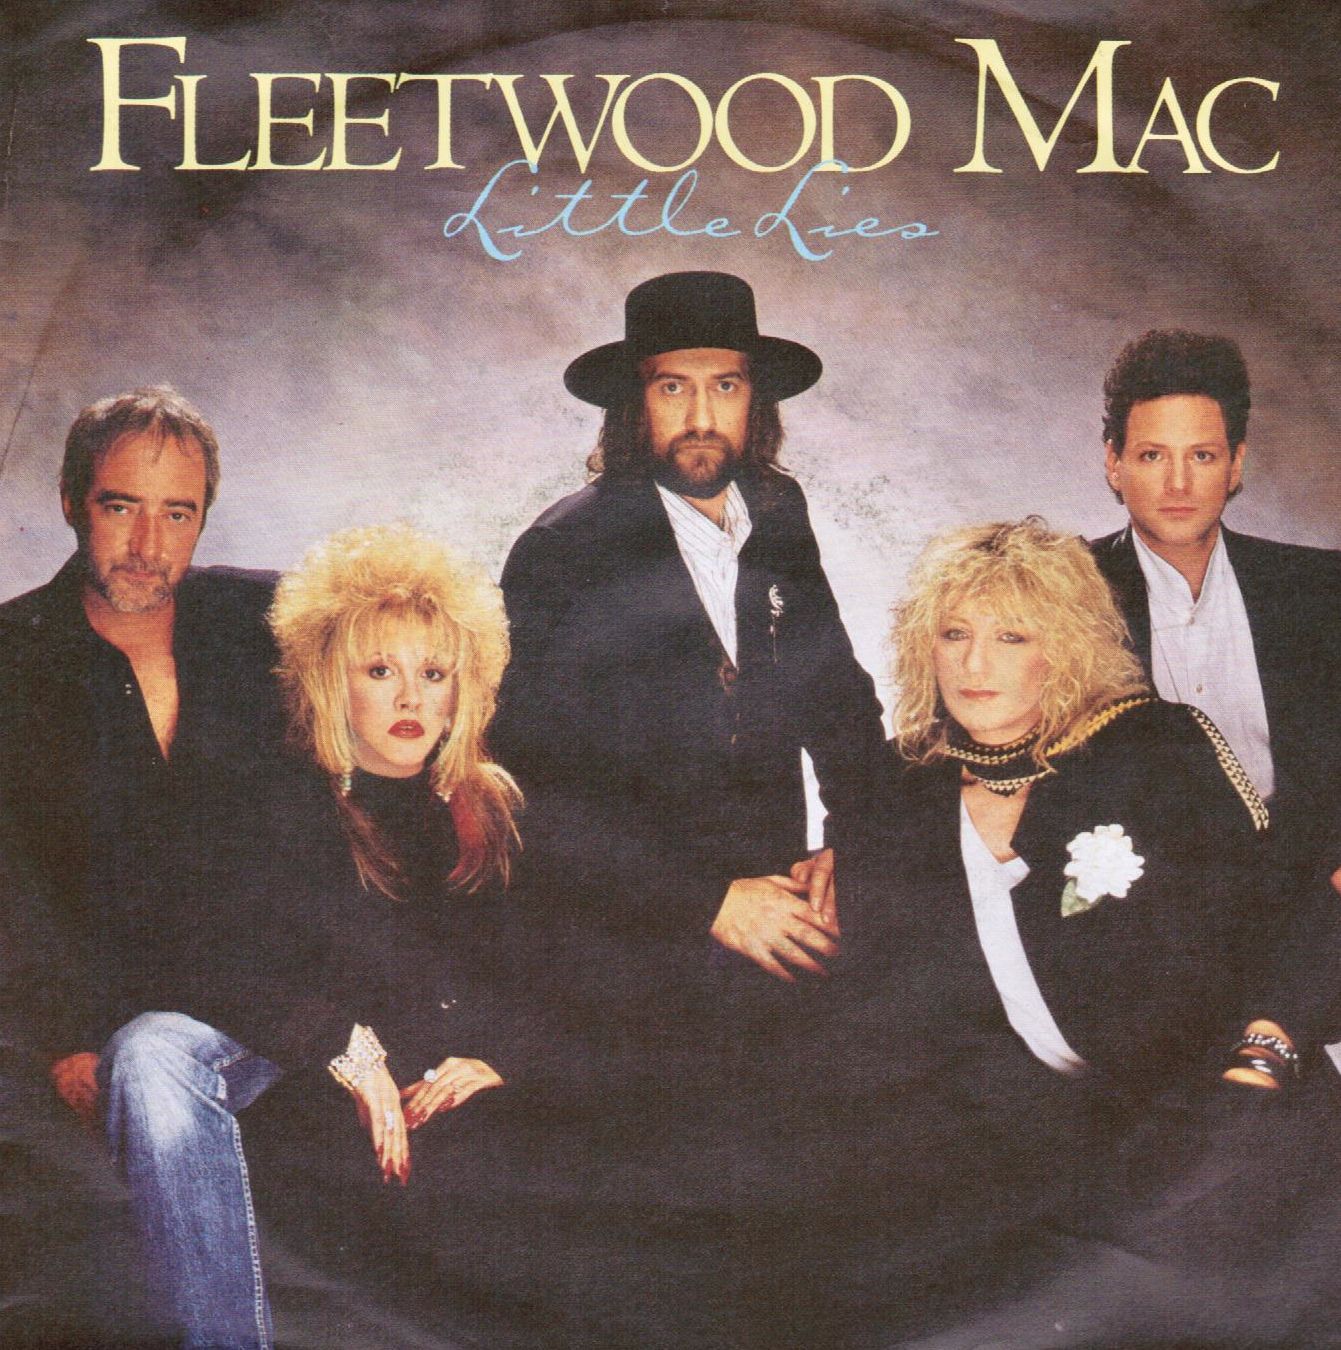 fleetwood mac the dance songs